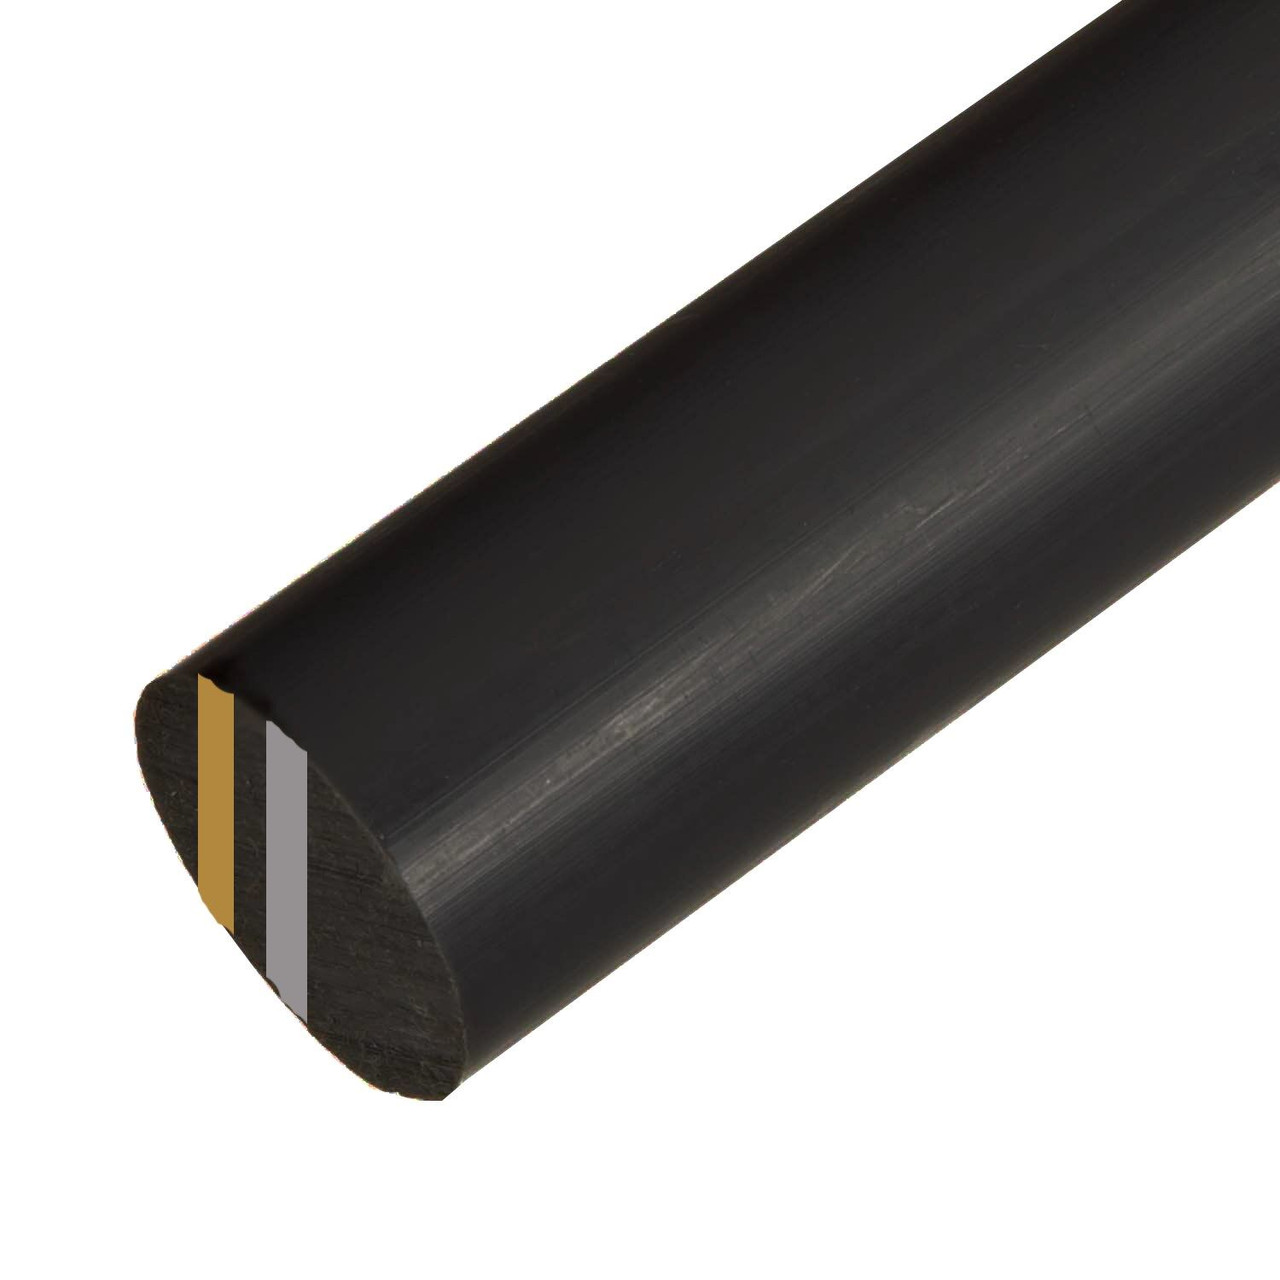 PPSU Radel MG Round Rod, Diameter: 3.000 (3 inch) x 11 inches long, Black